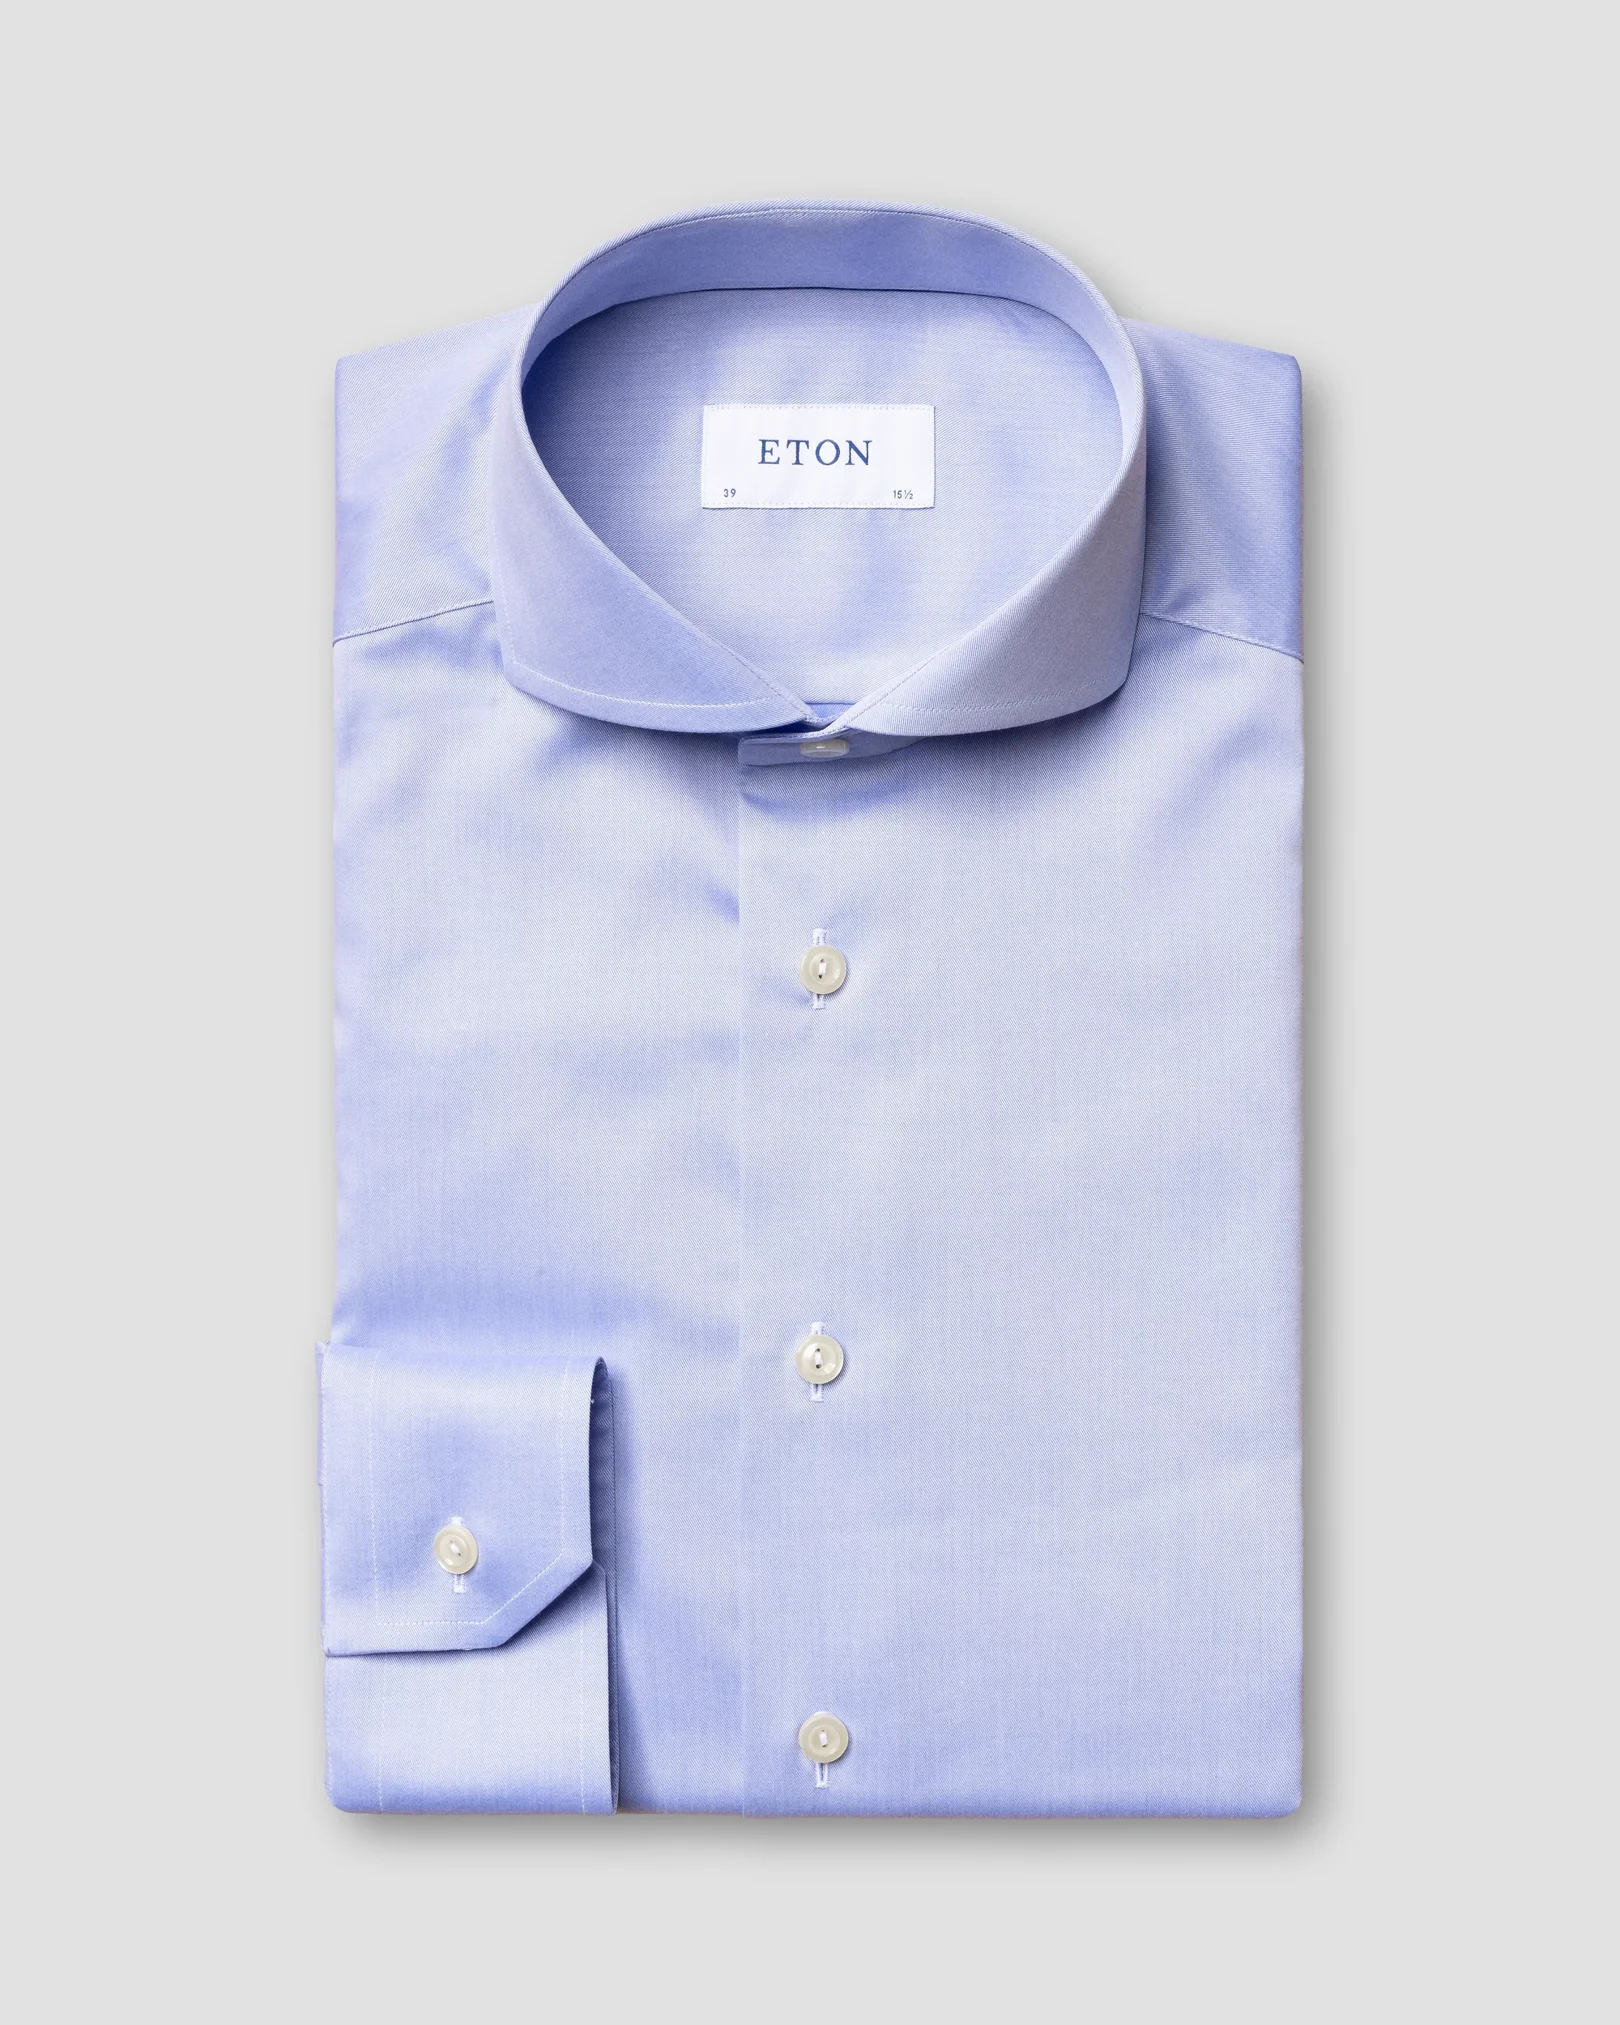 Eton - blue fine twill shirt extreme cut away